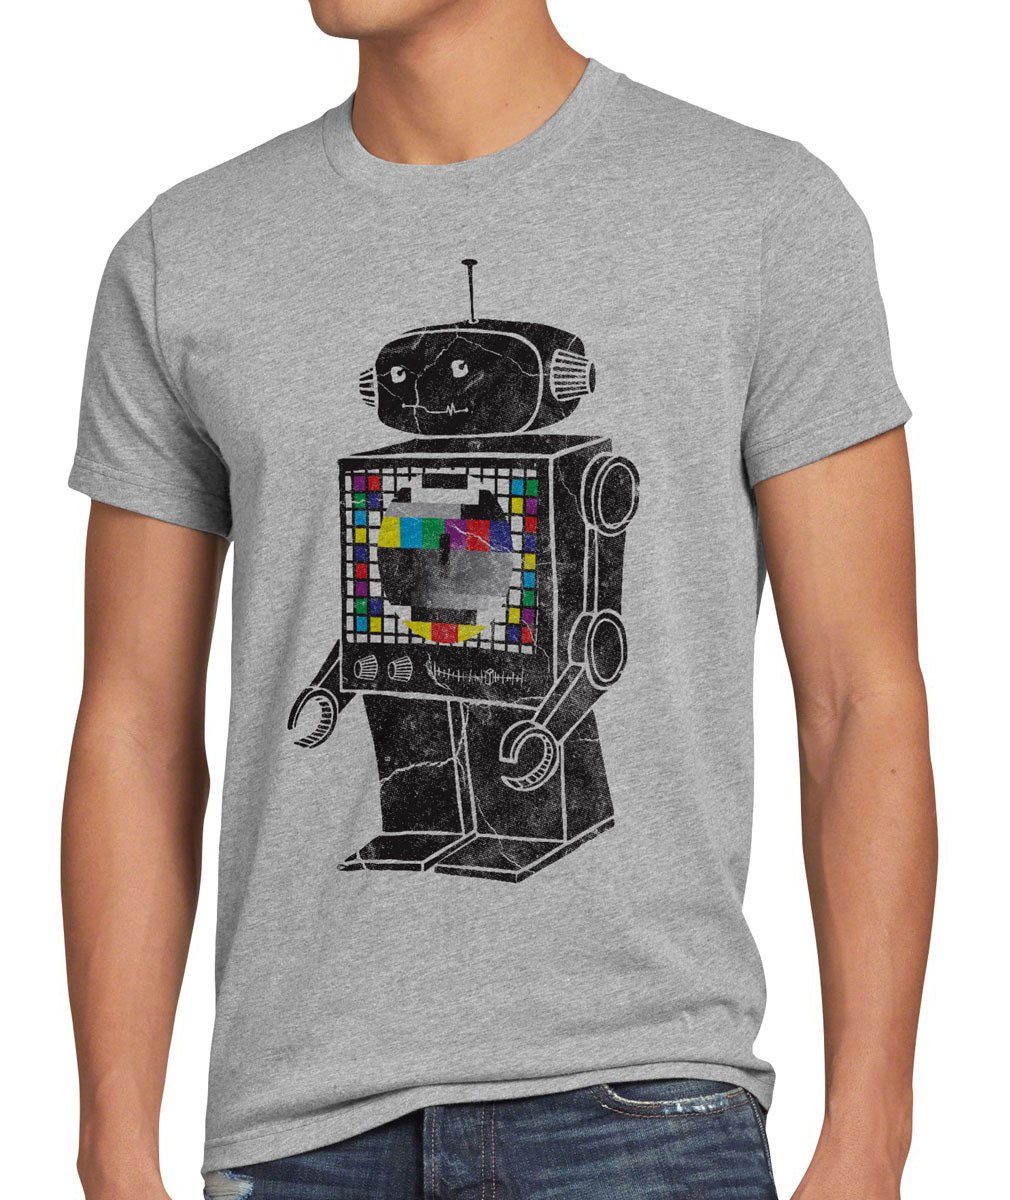 cooper Print-Shirt Big TV meliert T-Shirt Monitor Sheldon Testbild grau style3 Roboter Herren theory Bang Robot